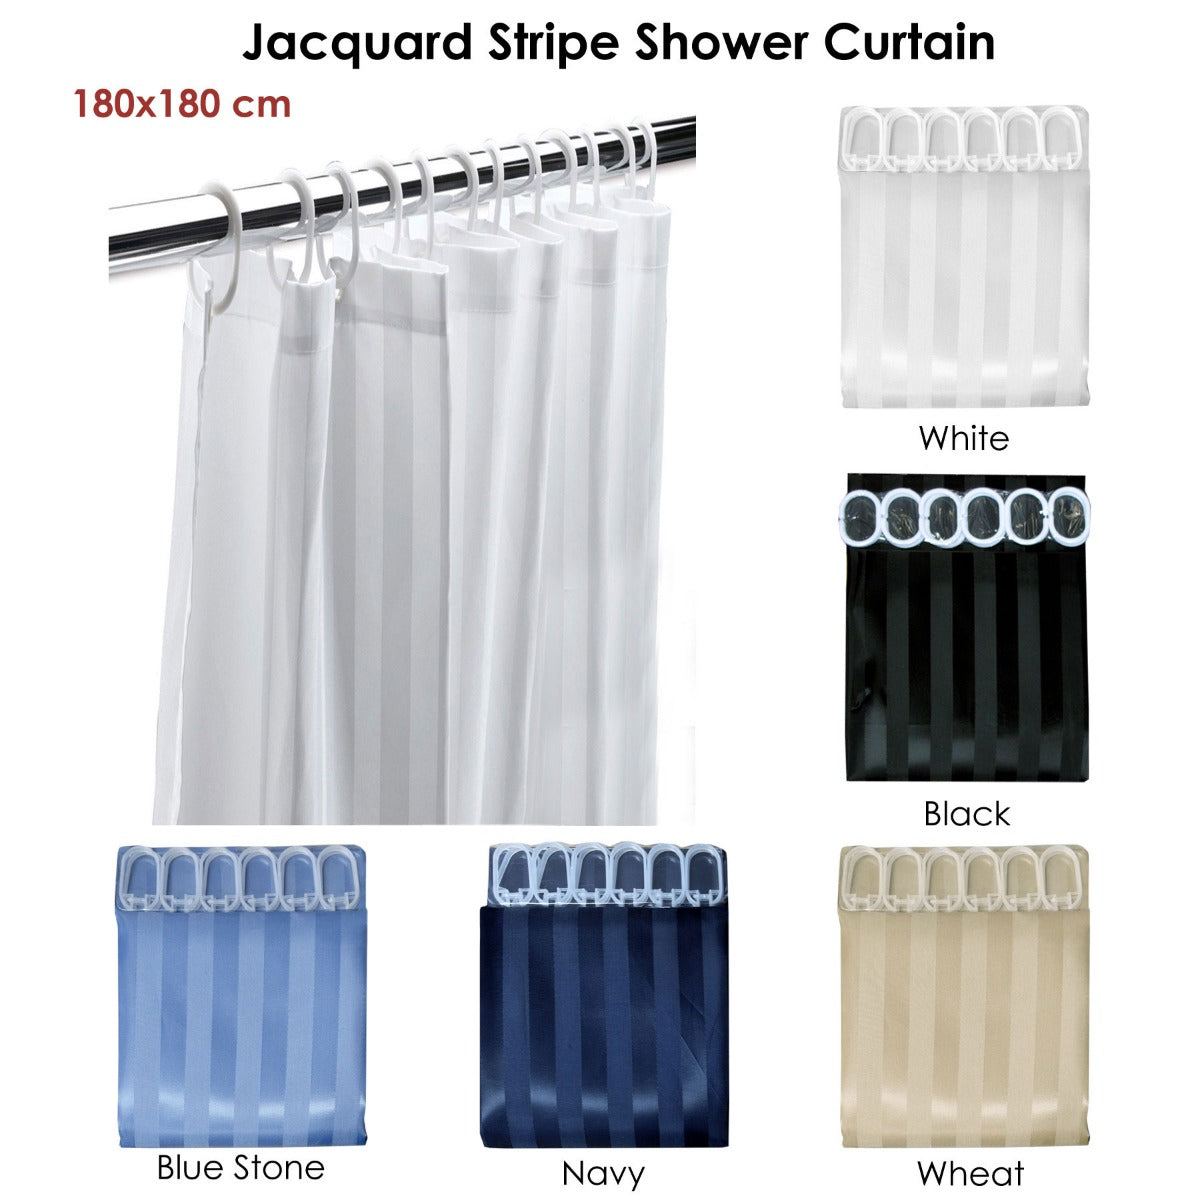 Jacquard Stripe Shower Curtain Navy - BM House & Garden